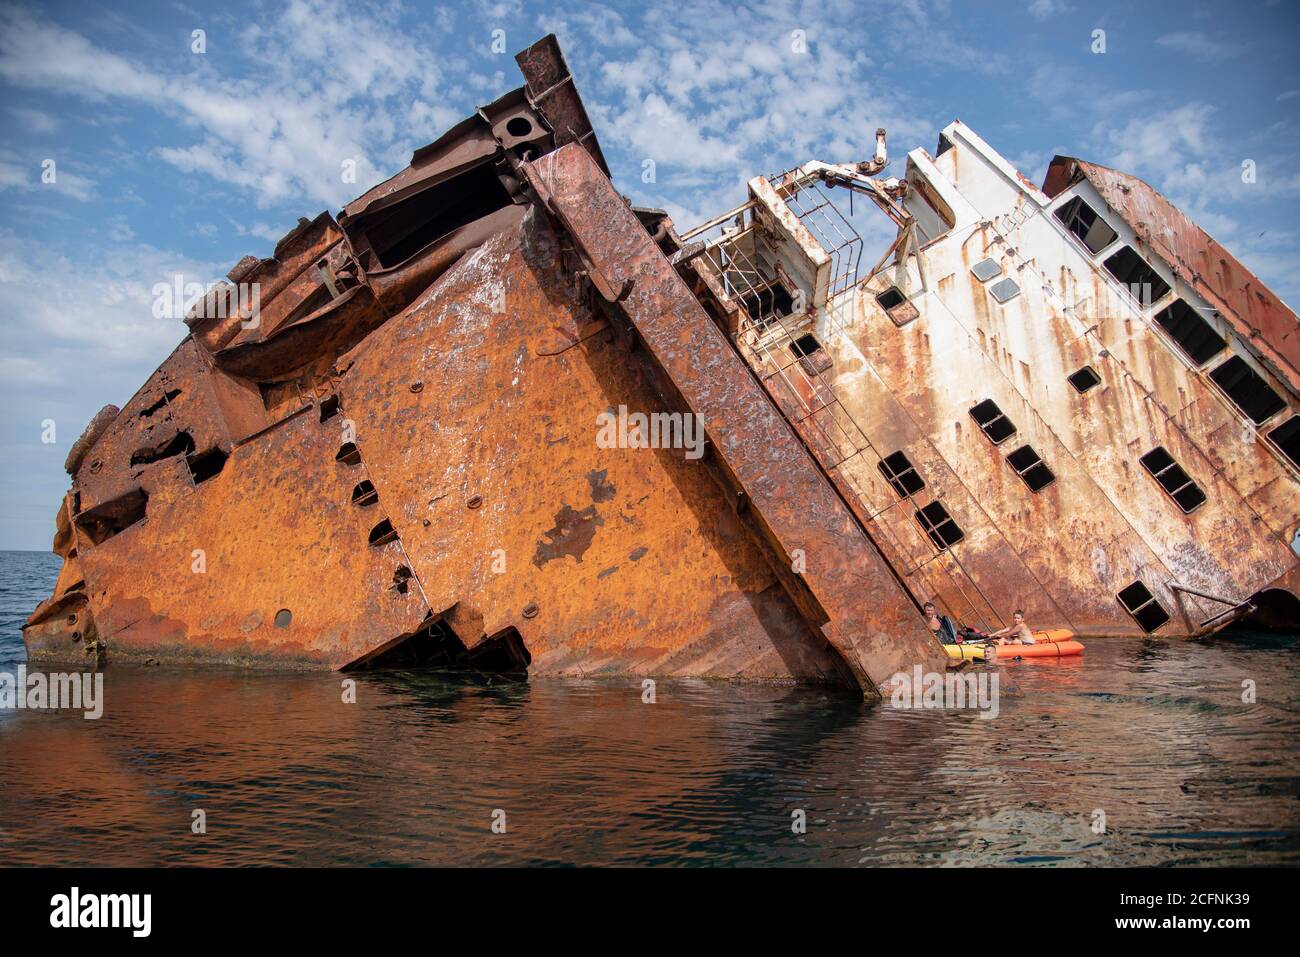 Remains of the sunken ship Ibrahim Yakim off the coast of Cape Tarhankut. Stock Photo